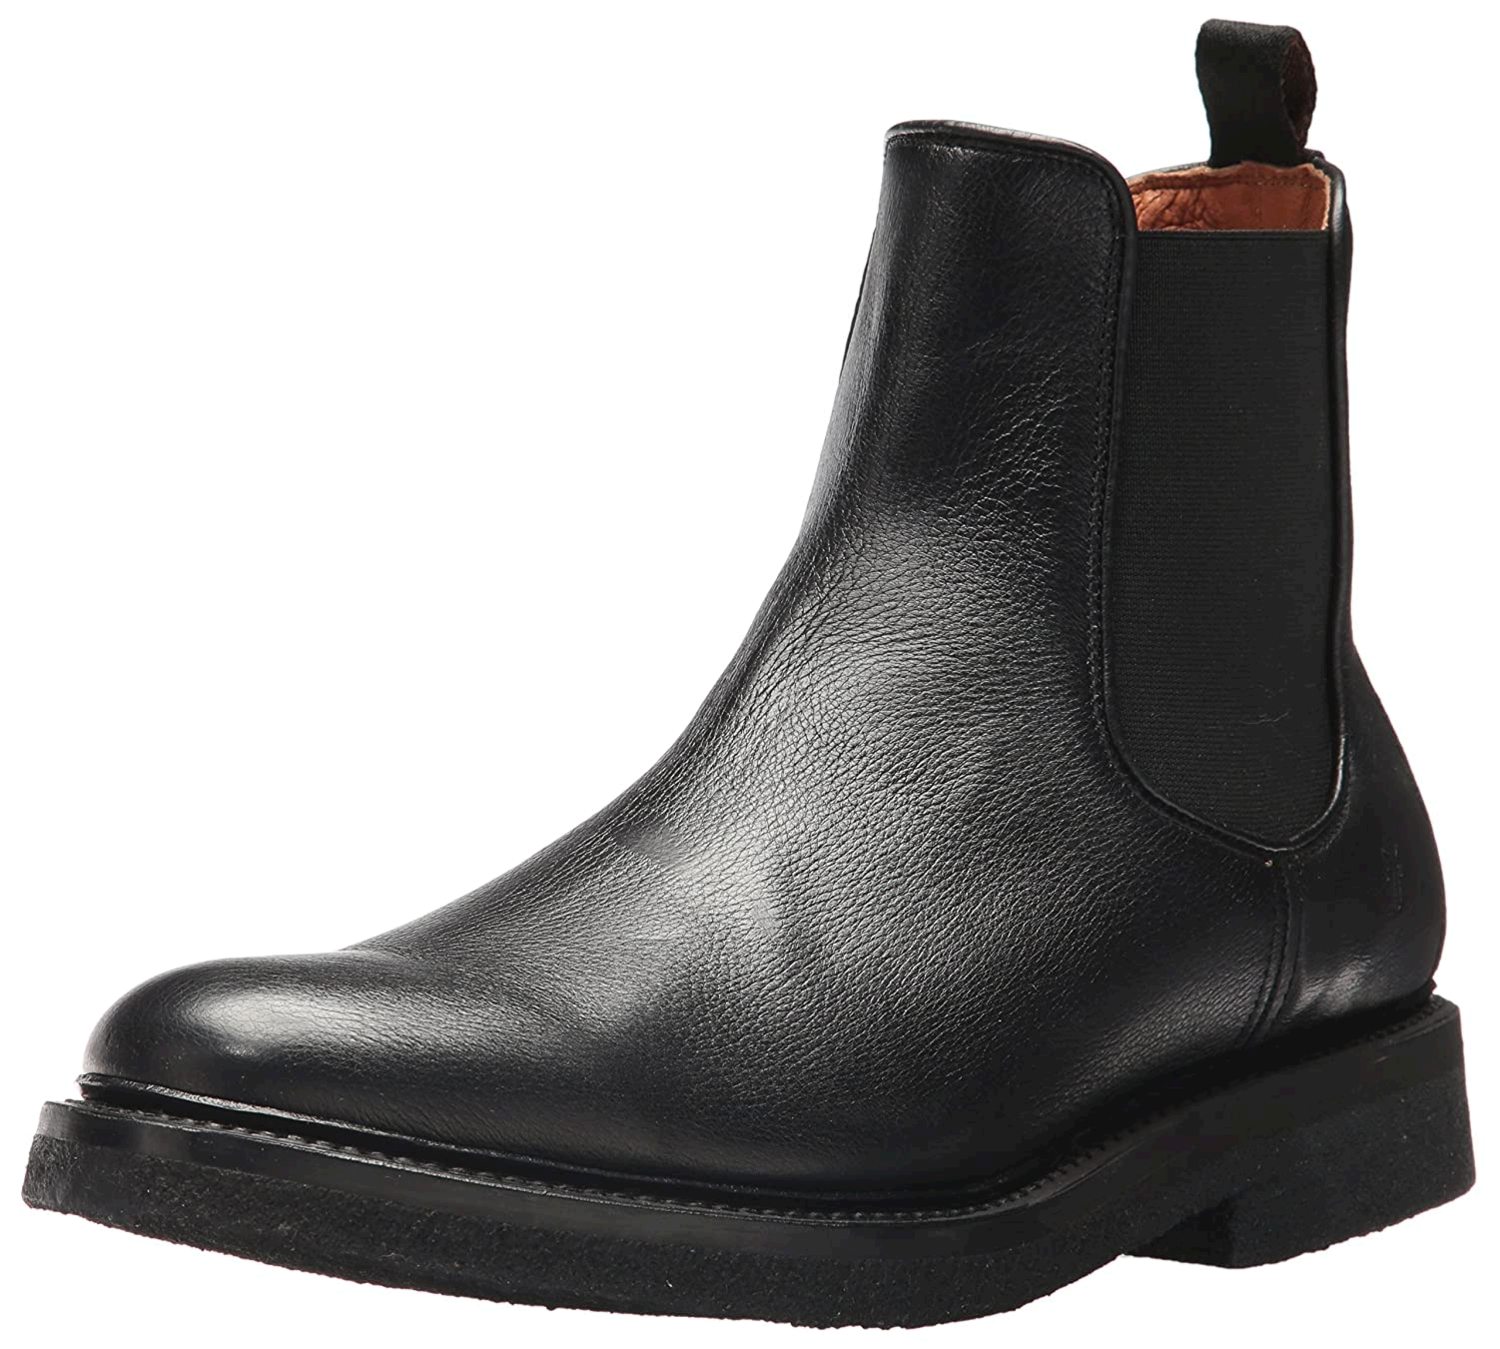 FRYE Men's Country Chelsea Boot, Black, Size 9.5 2Qye 190918006710 | eBay